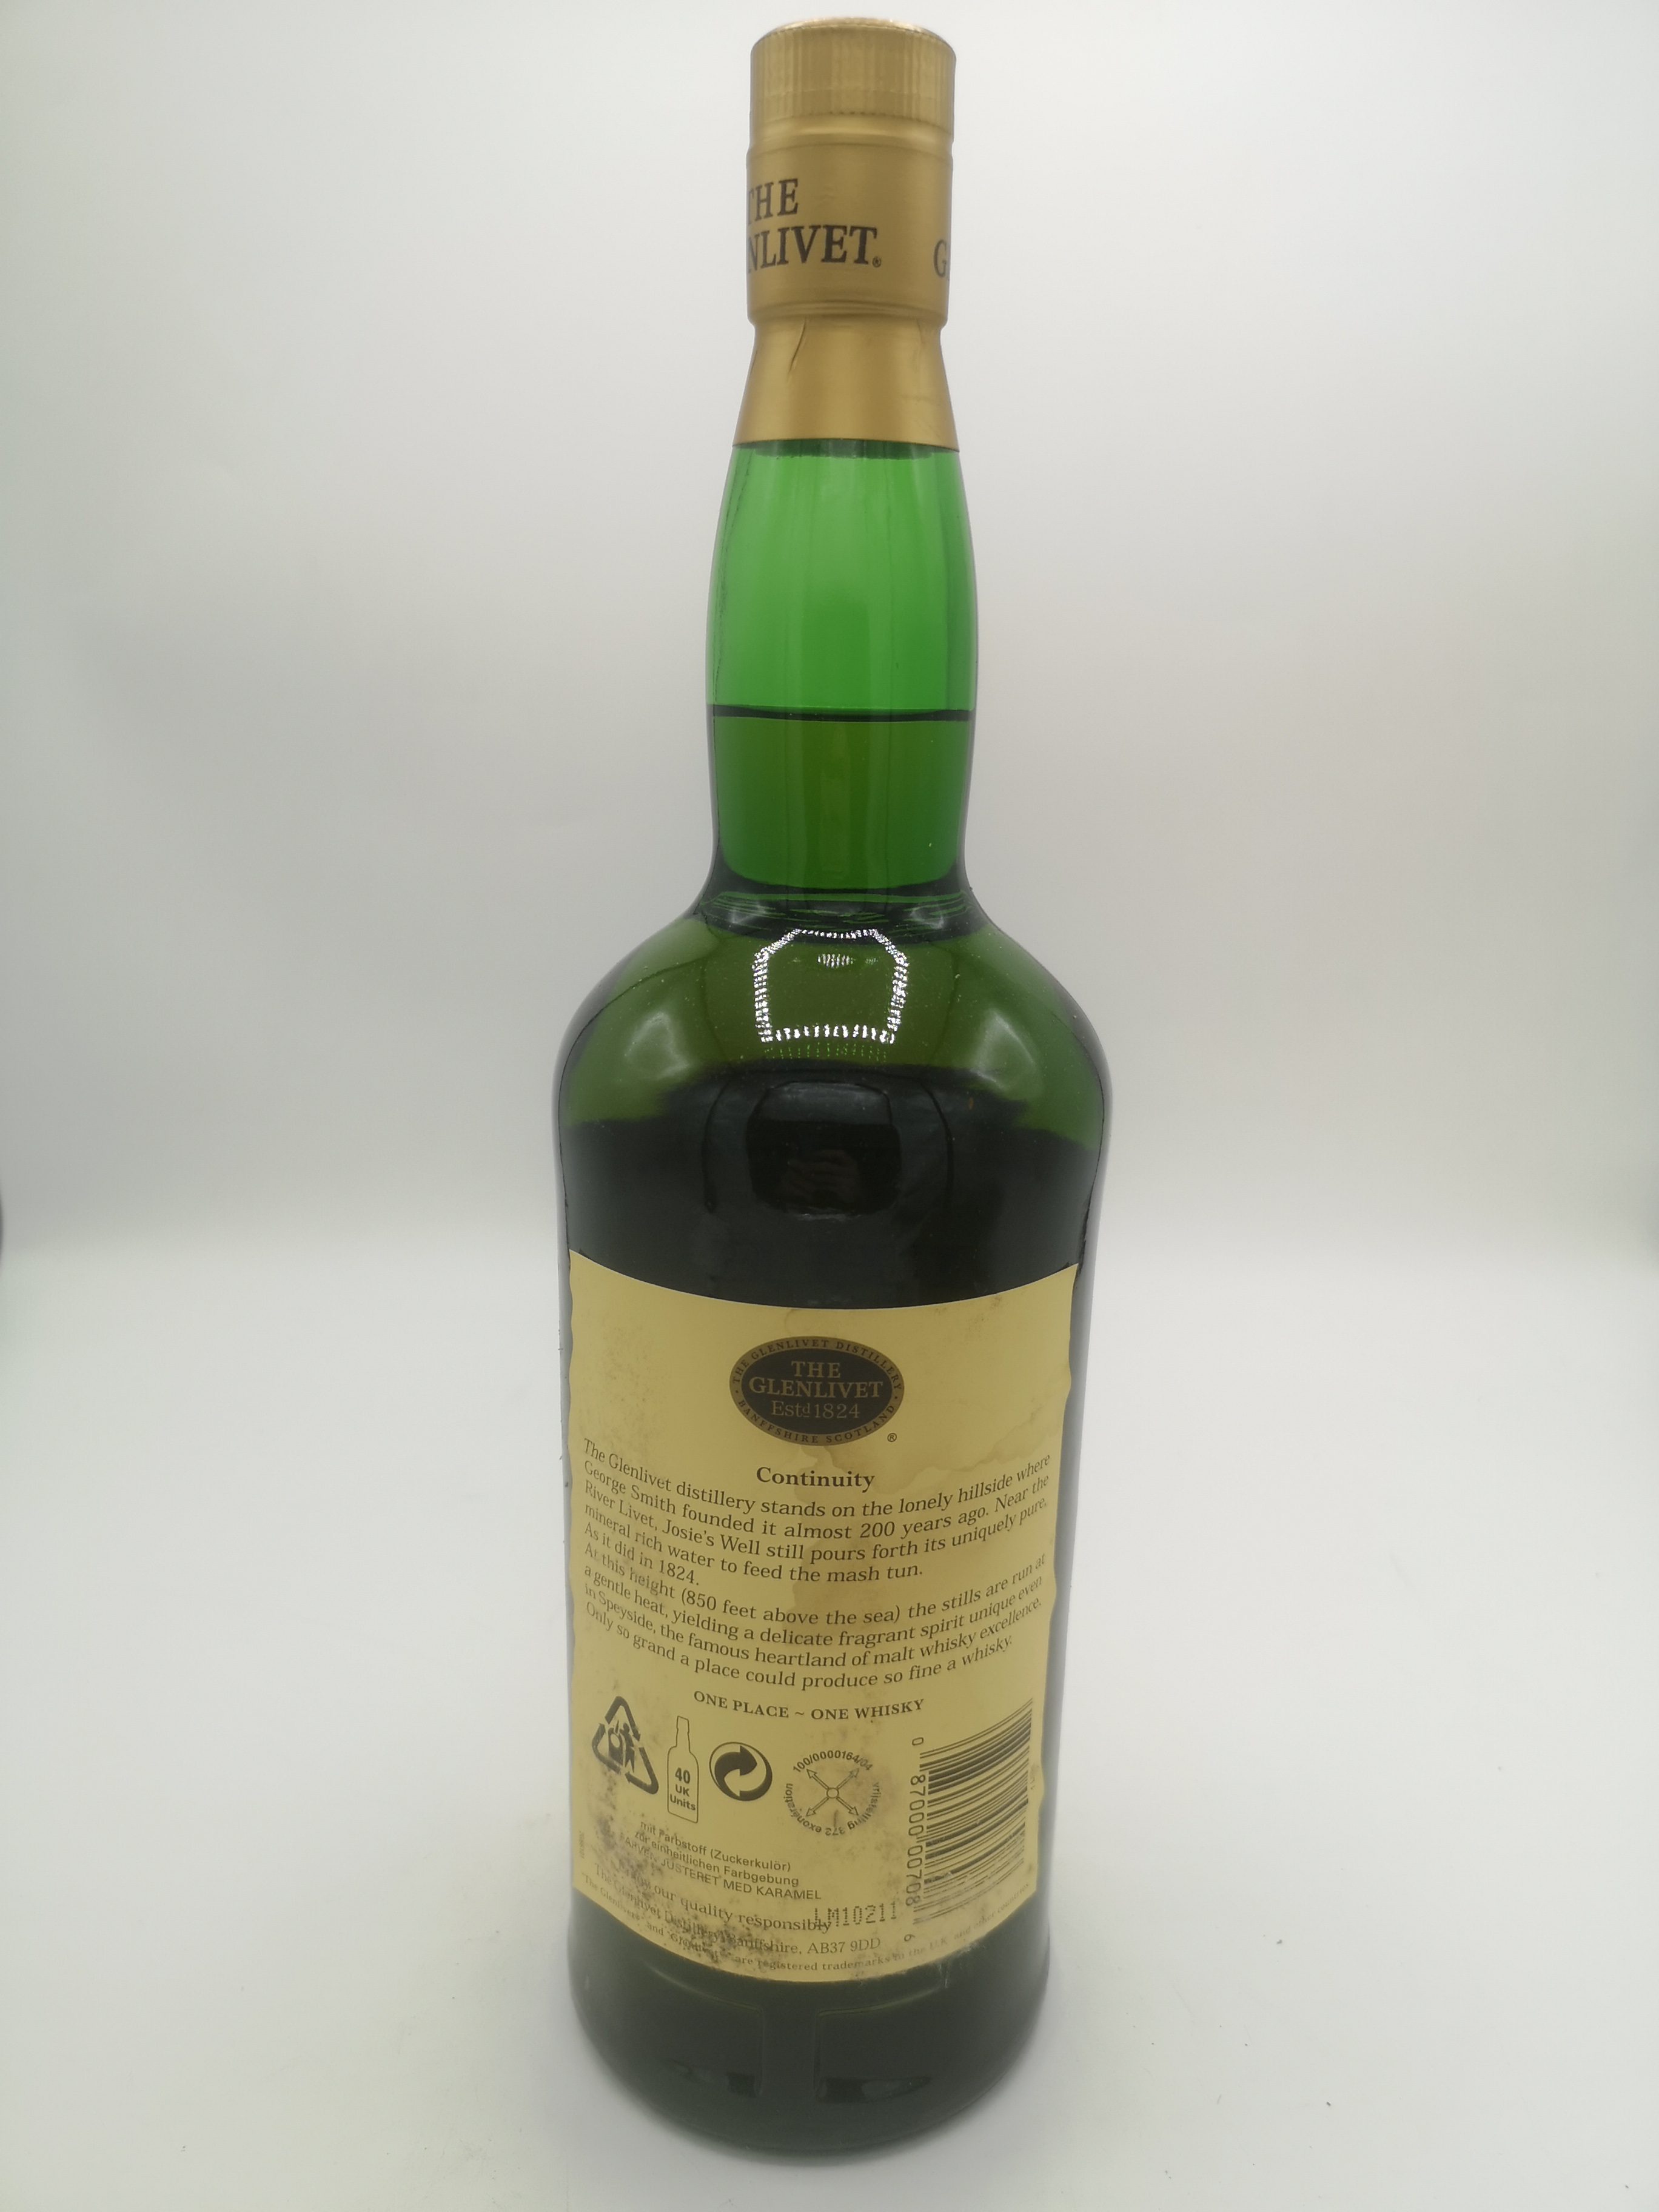 The Glenlivet, 1l pure single malt Scotch whisky - Image 4 of 8